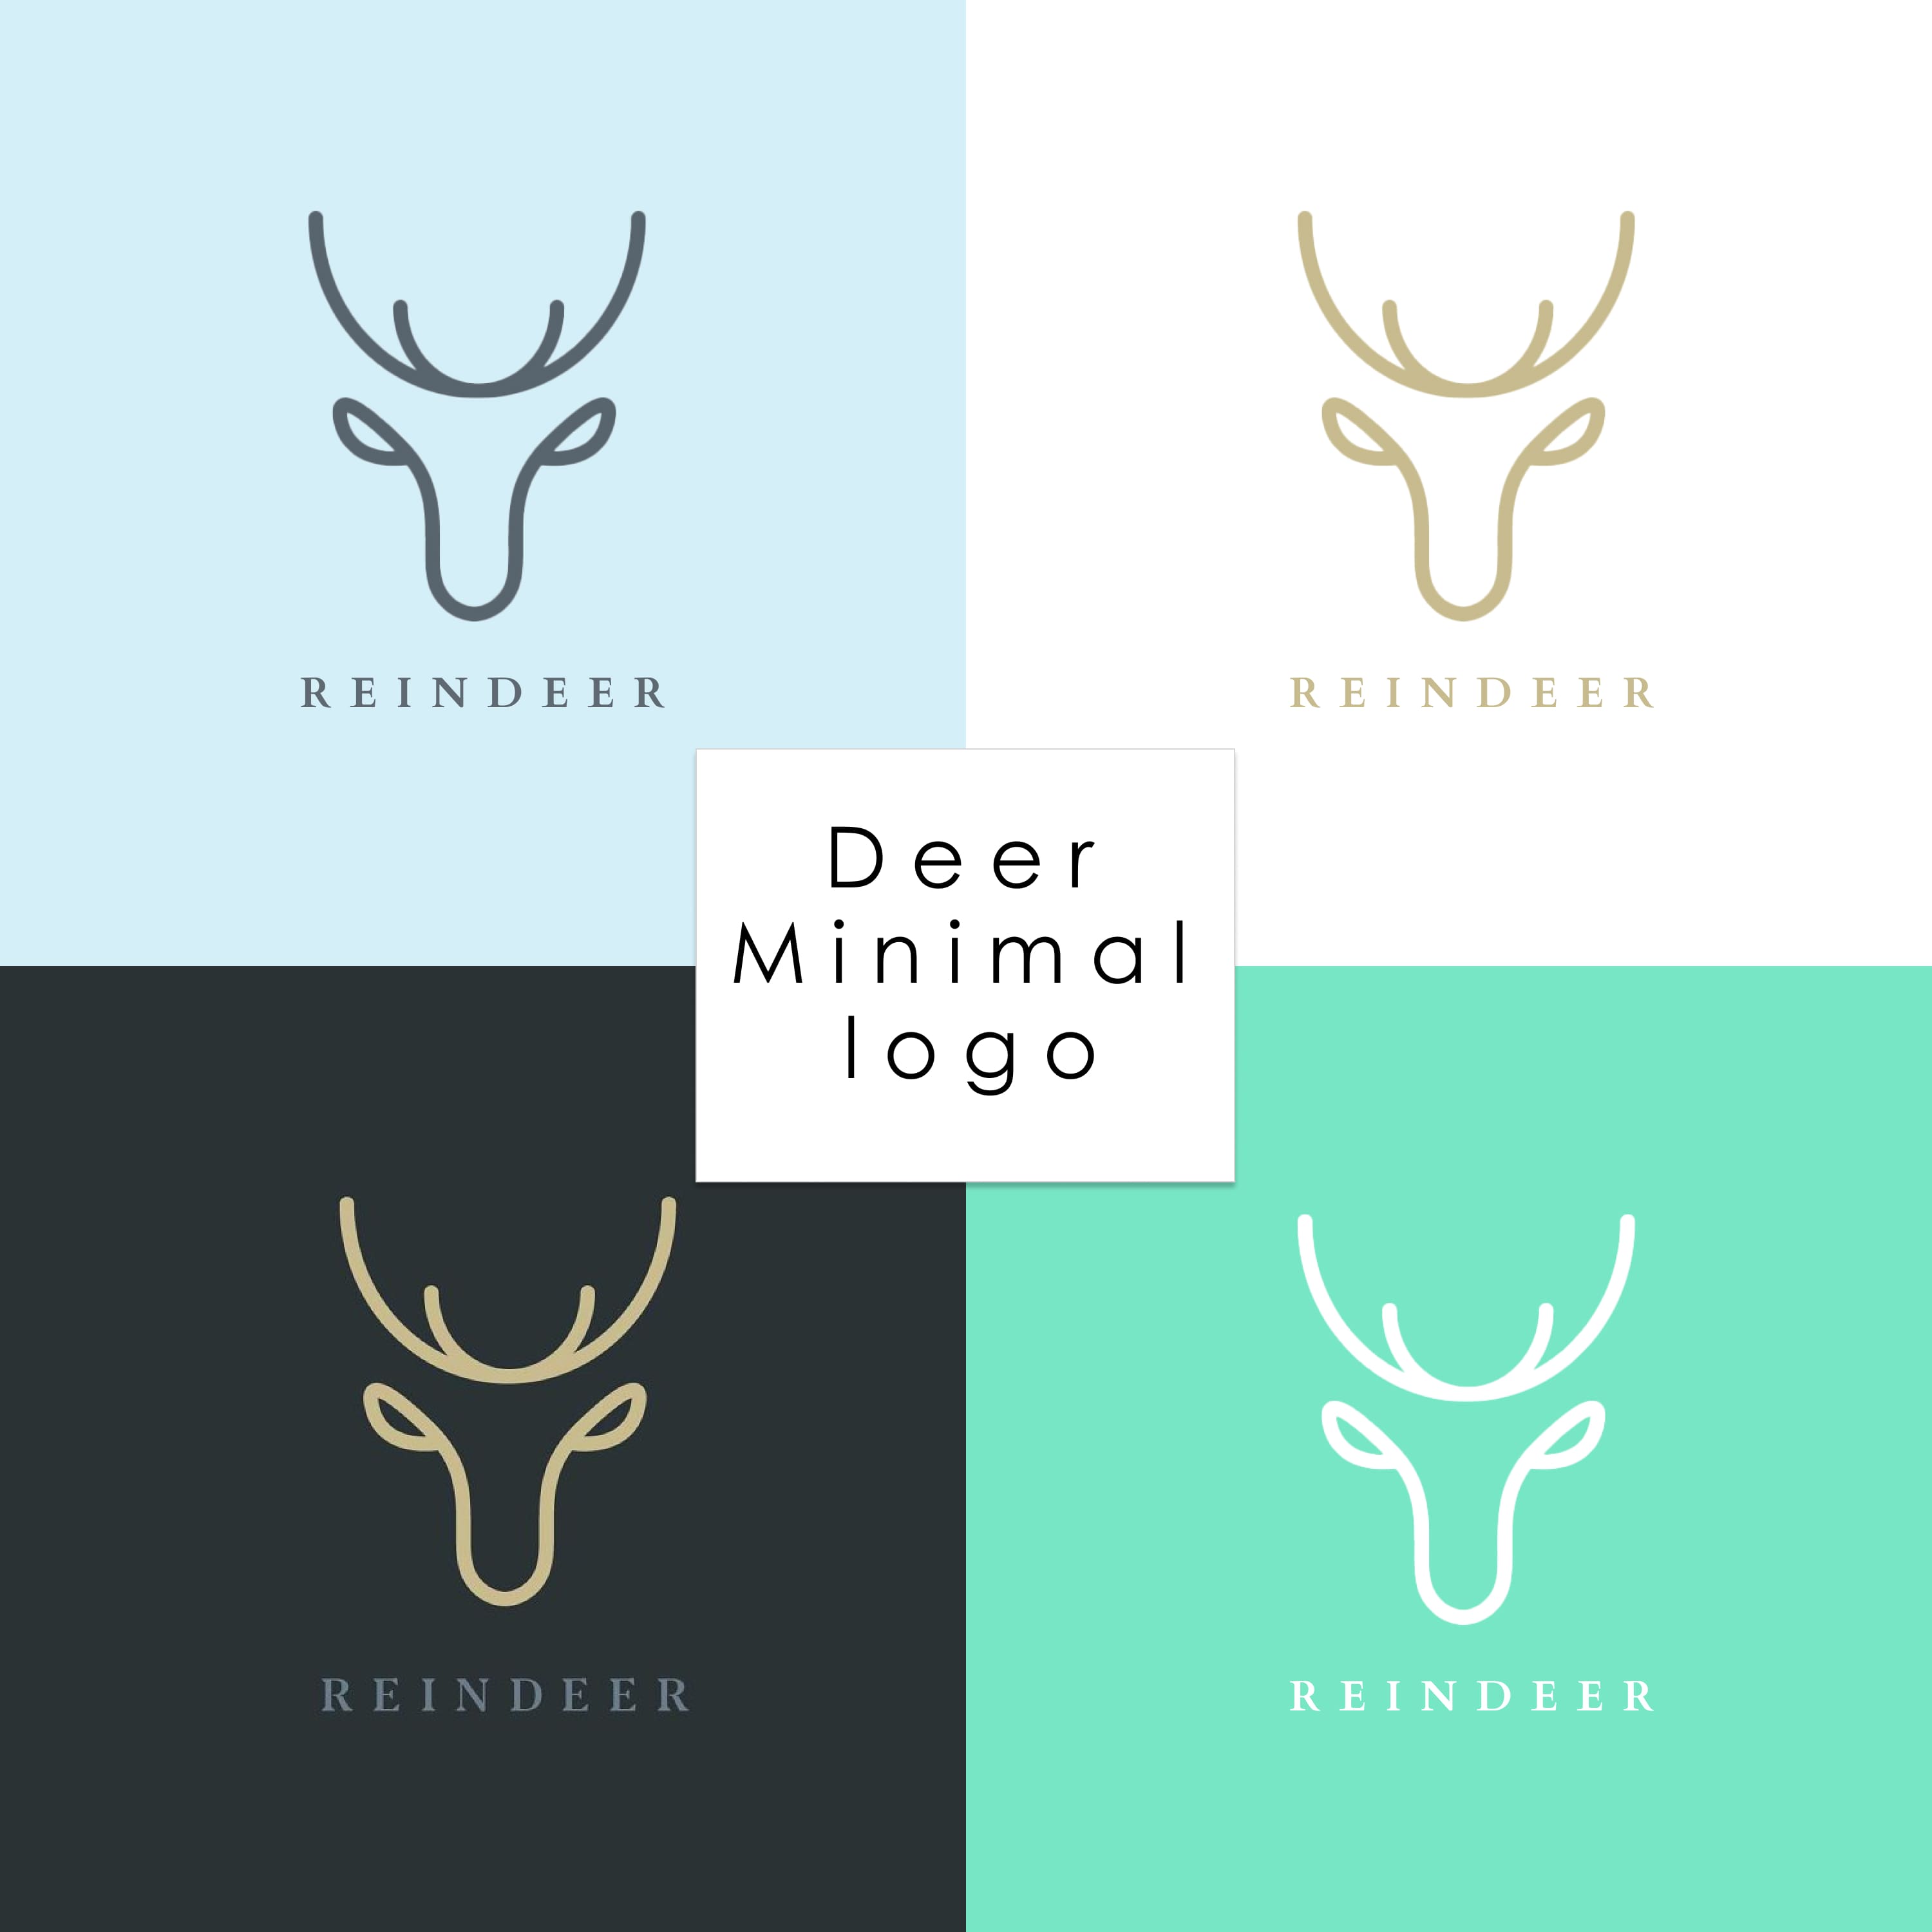 Deer Minimal logo.